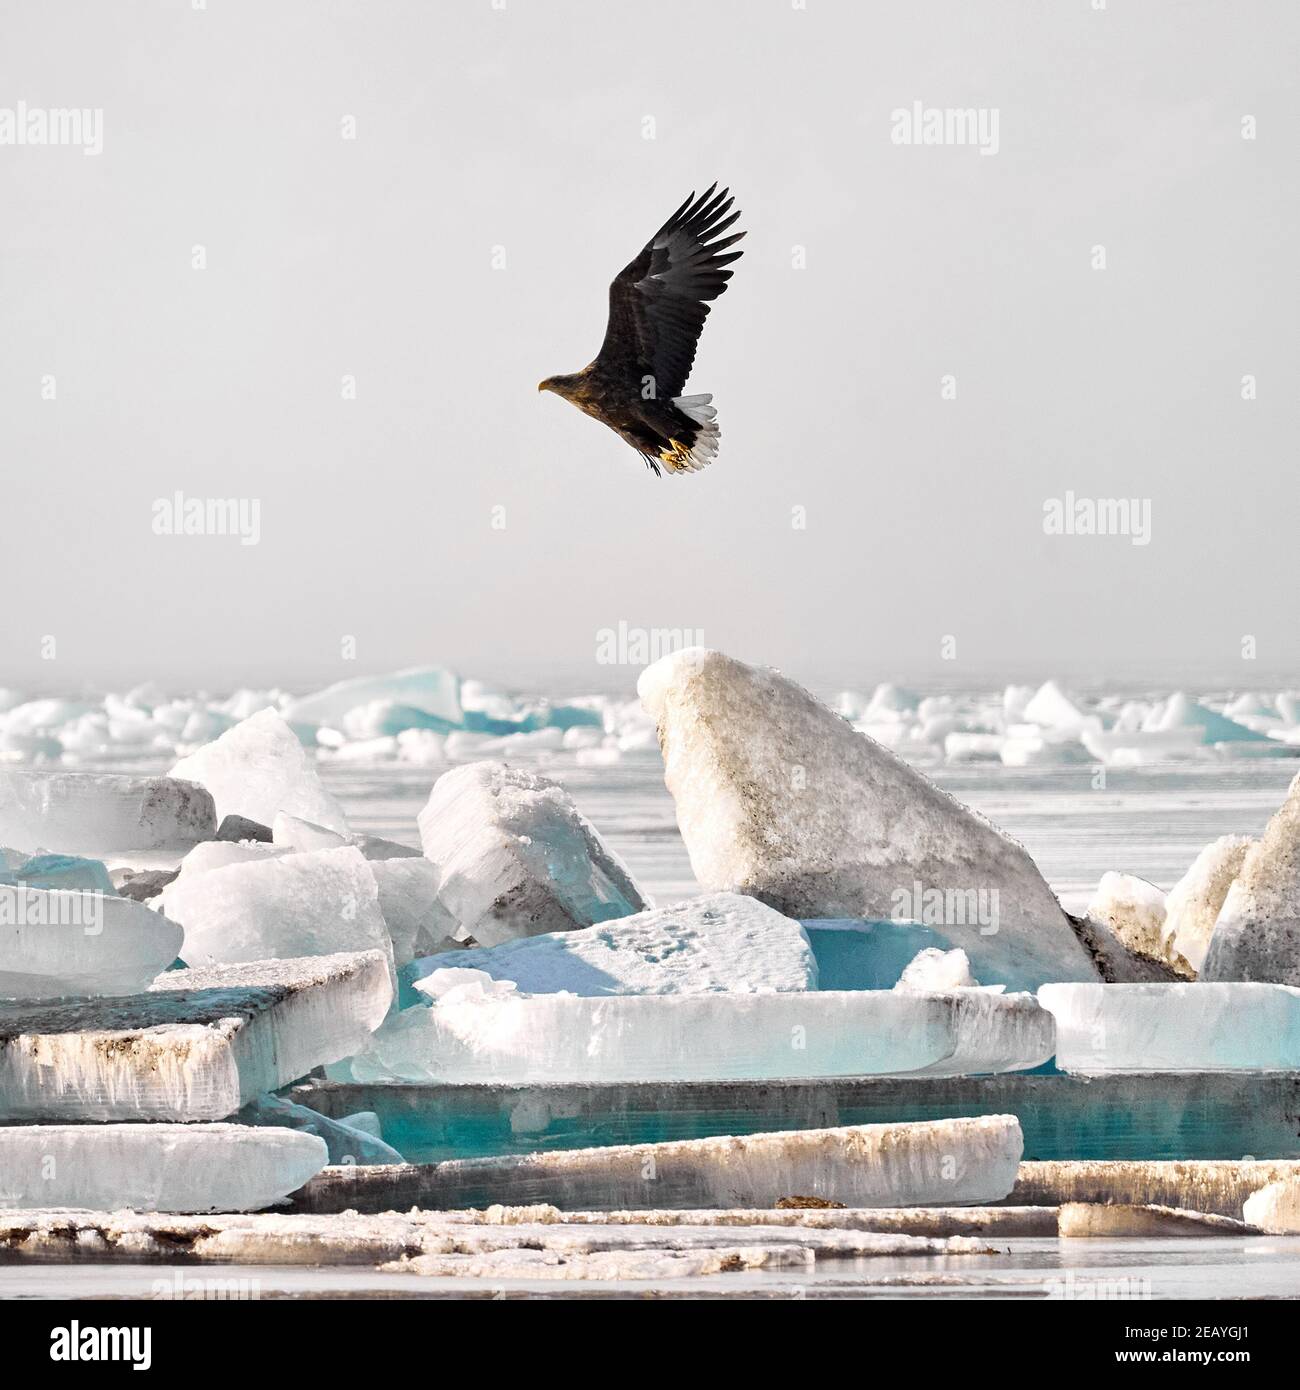 White tailed eagle in flight near Ice hummock at frozen lake Kapchagay, Kazakhstan Stock Photo